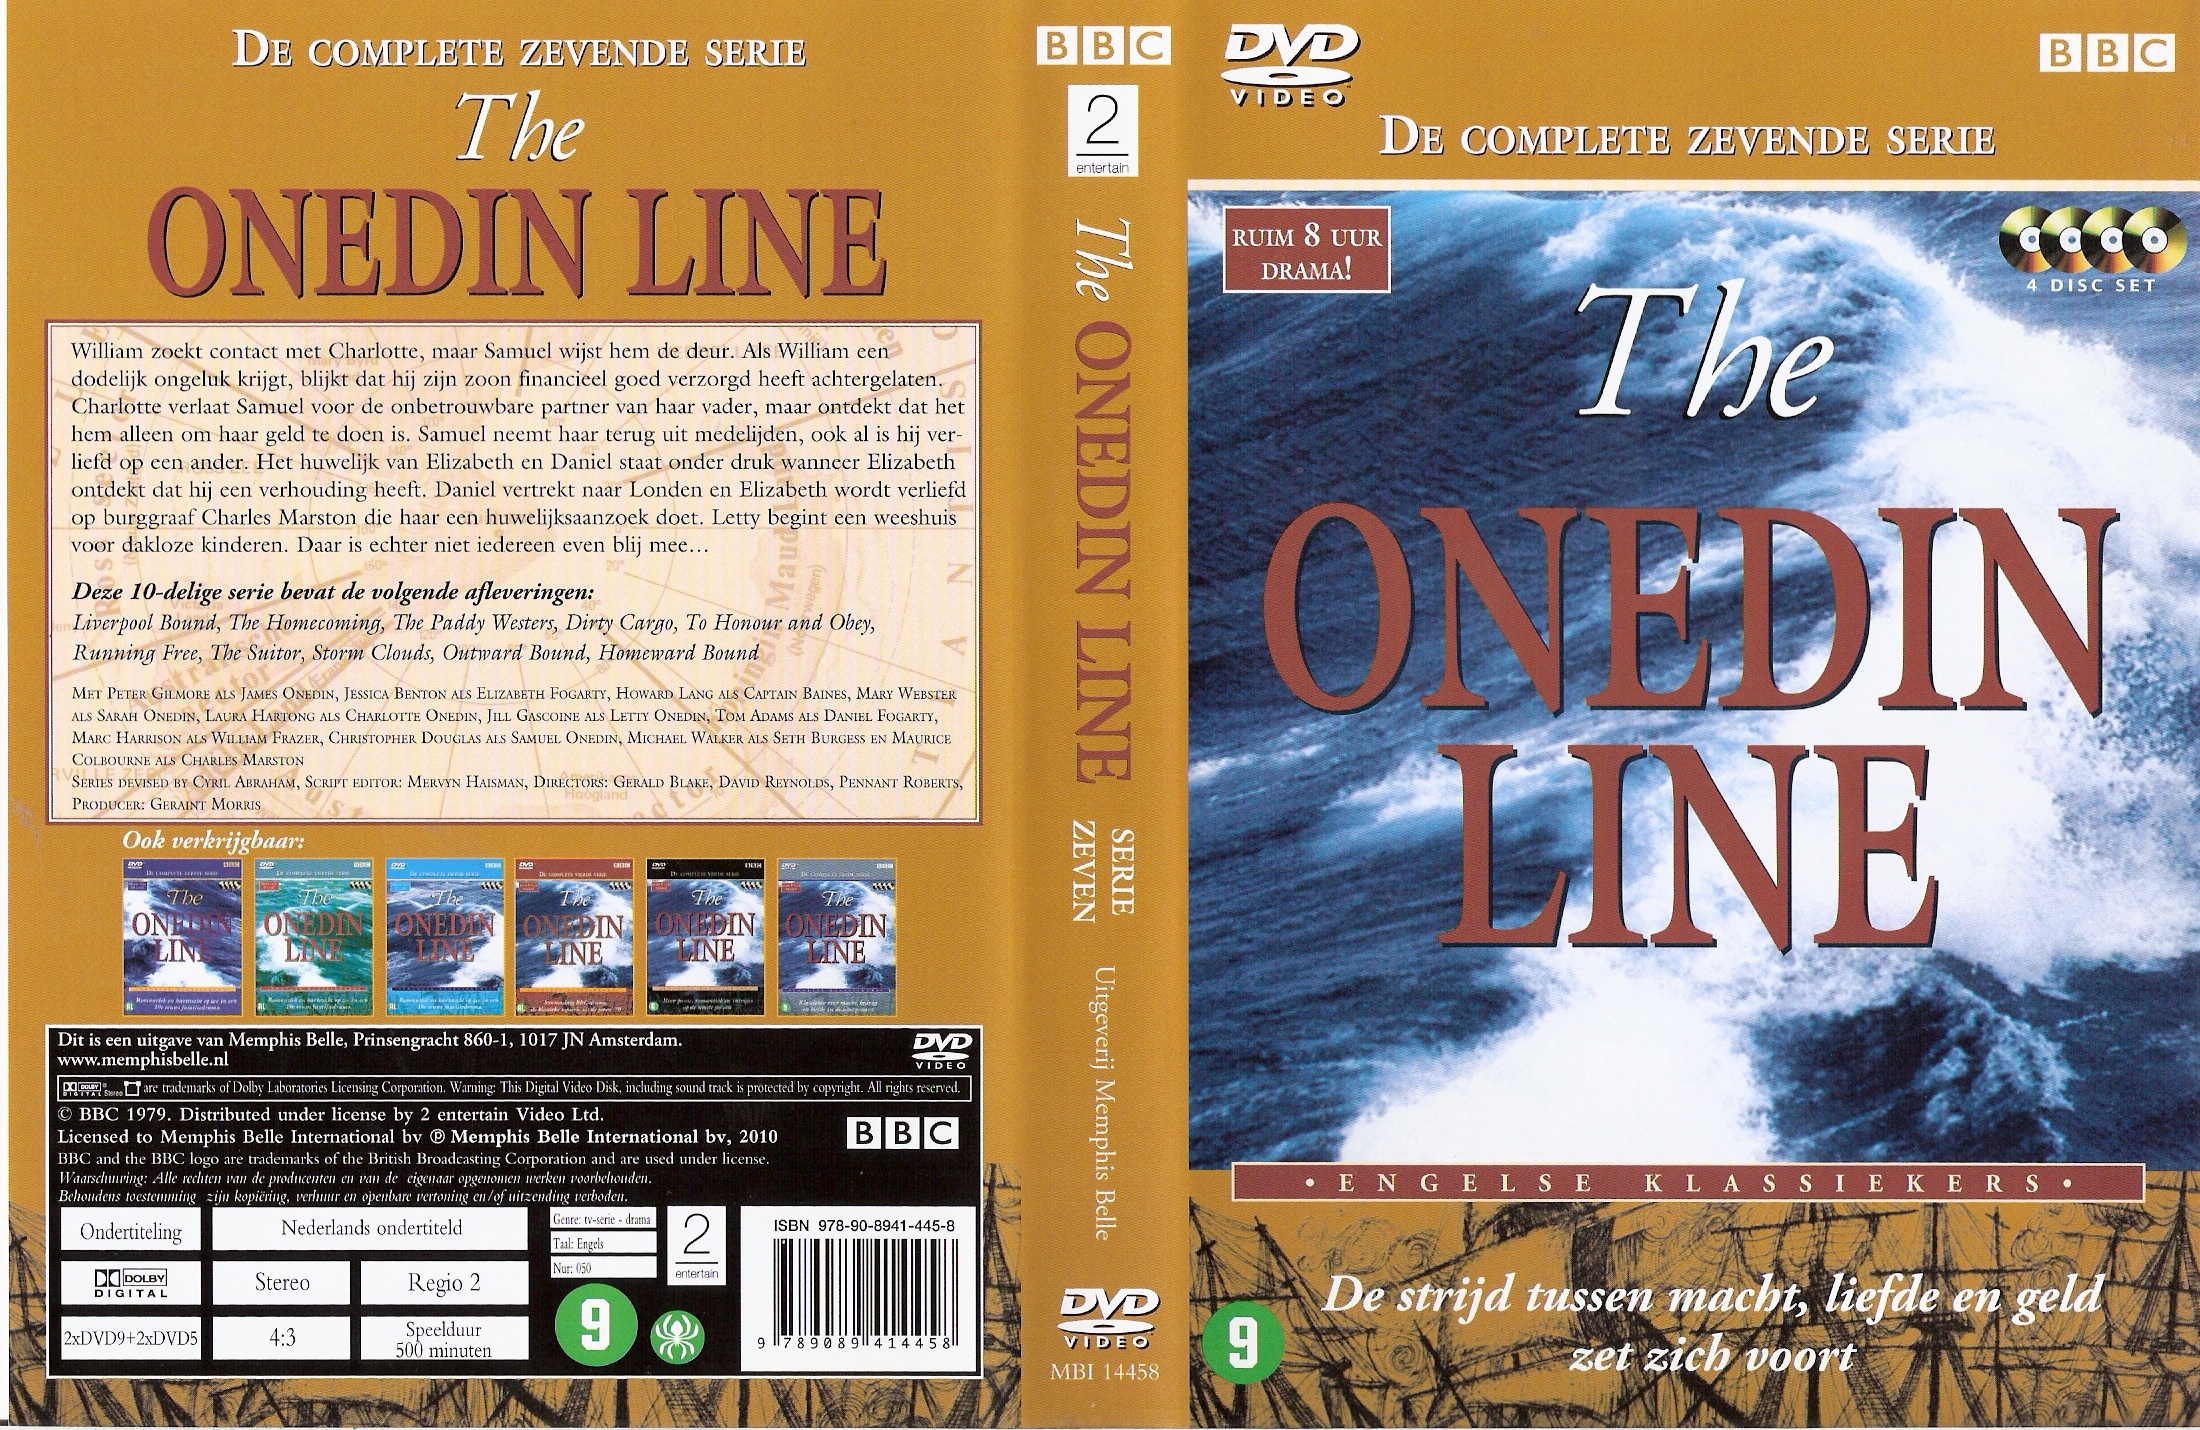 REPOST Onedin Line Serie 7 DvD 1 & 2